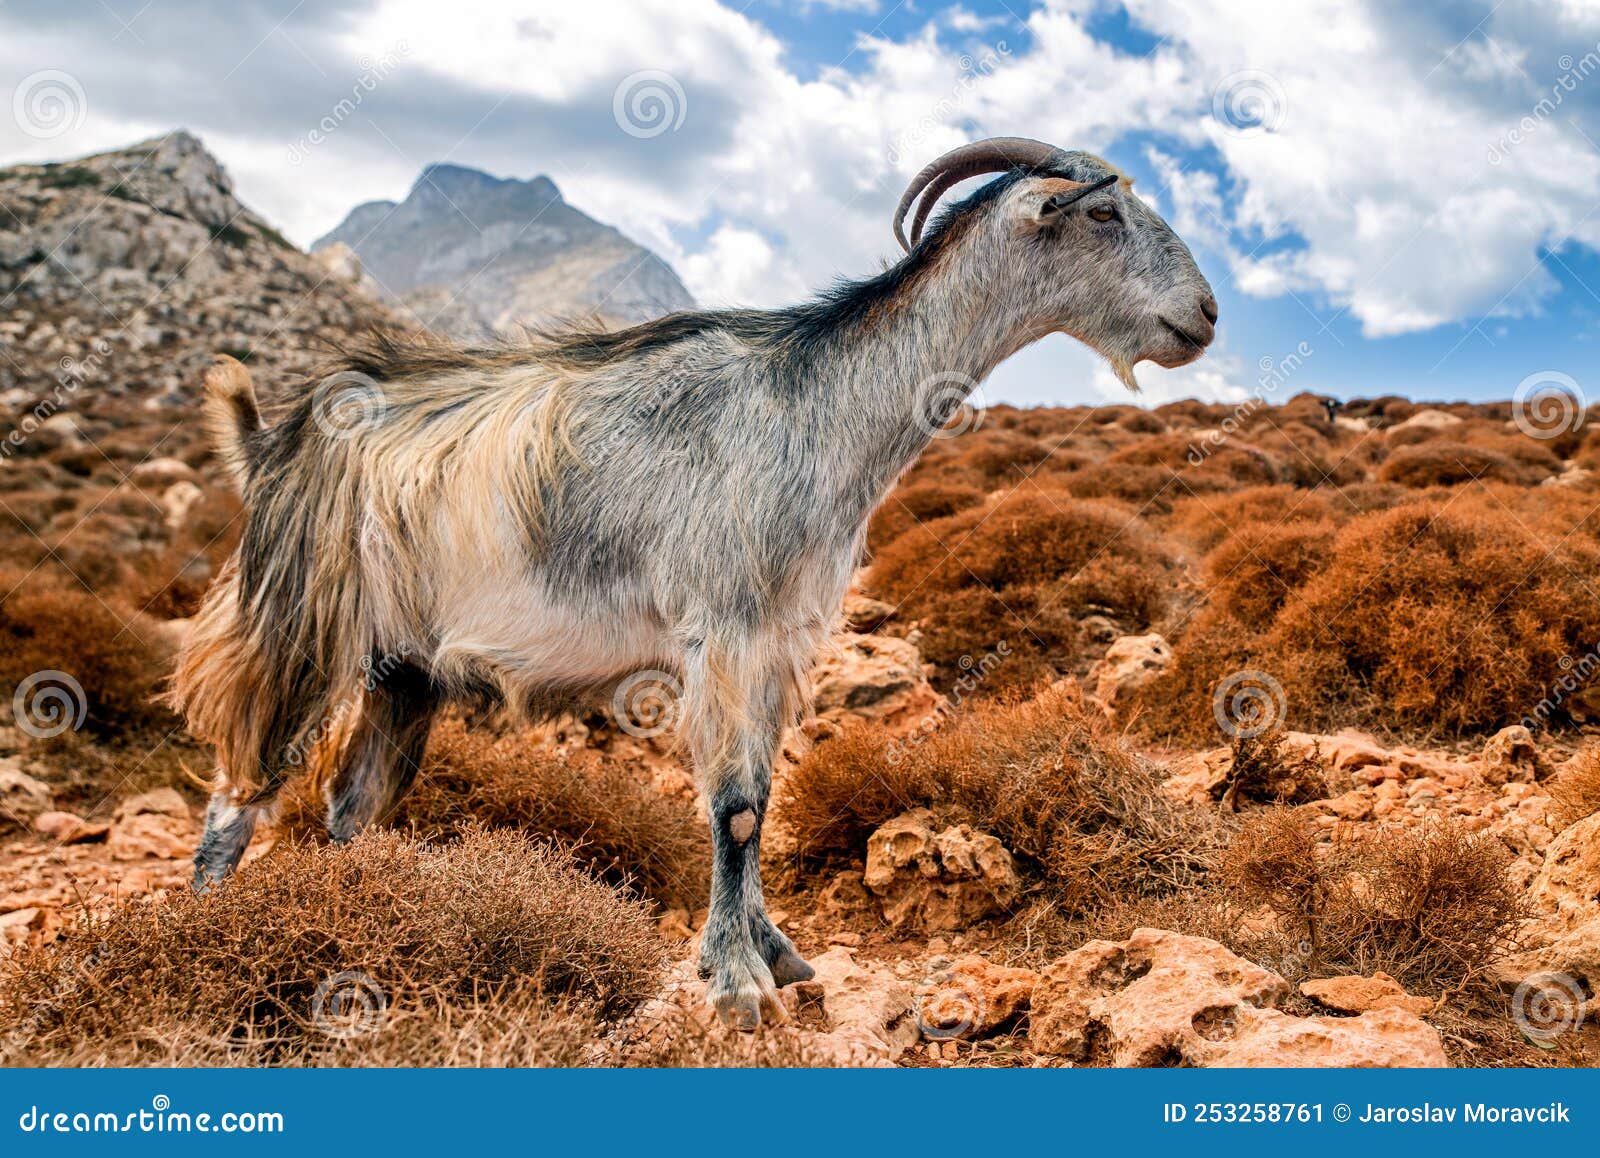 domestic goat on crete island, greece